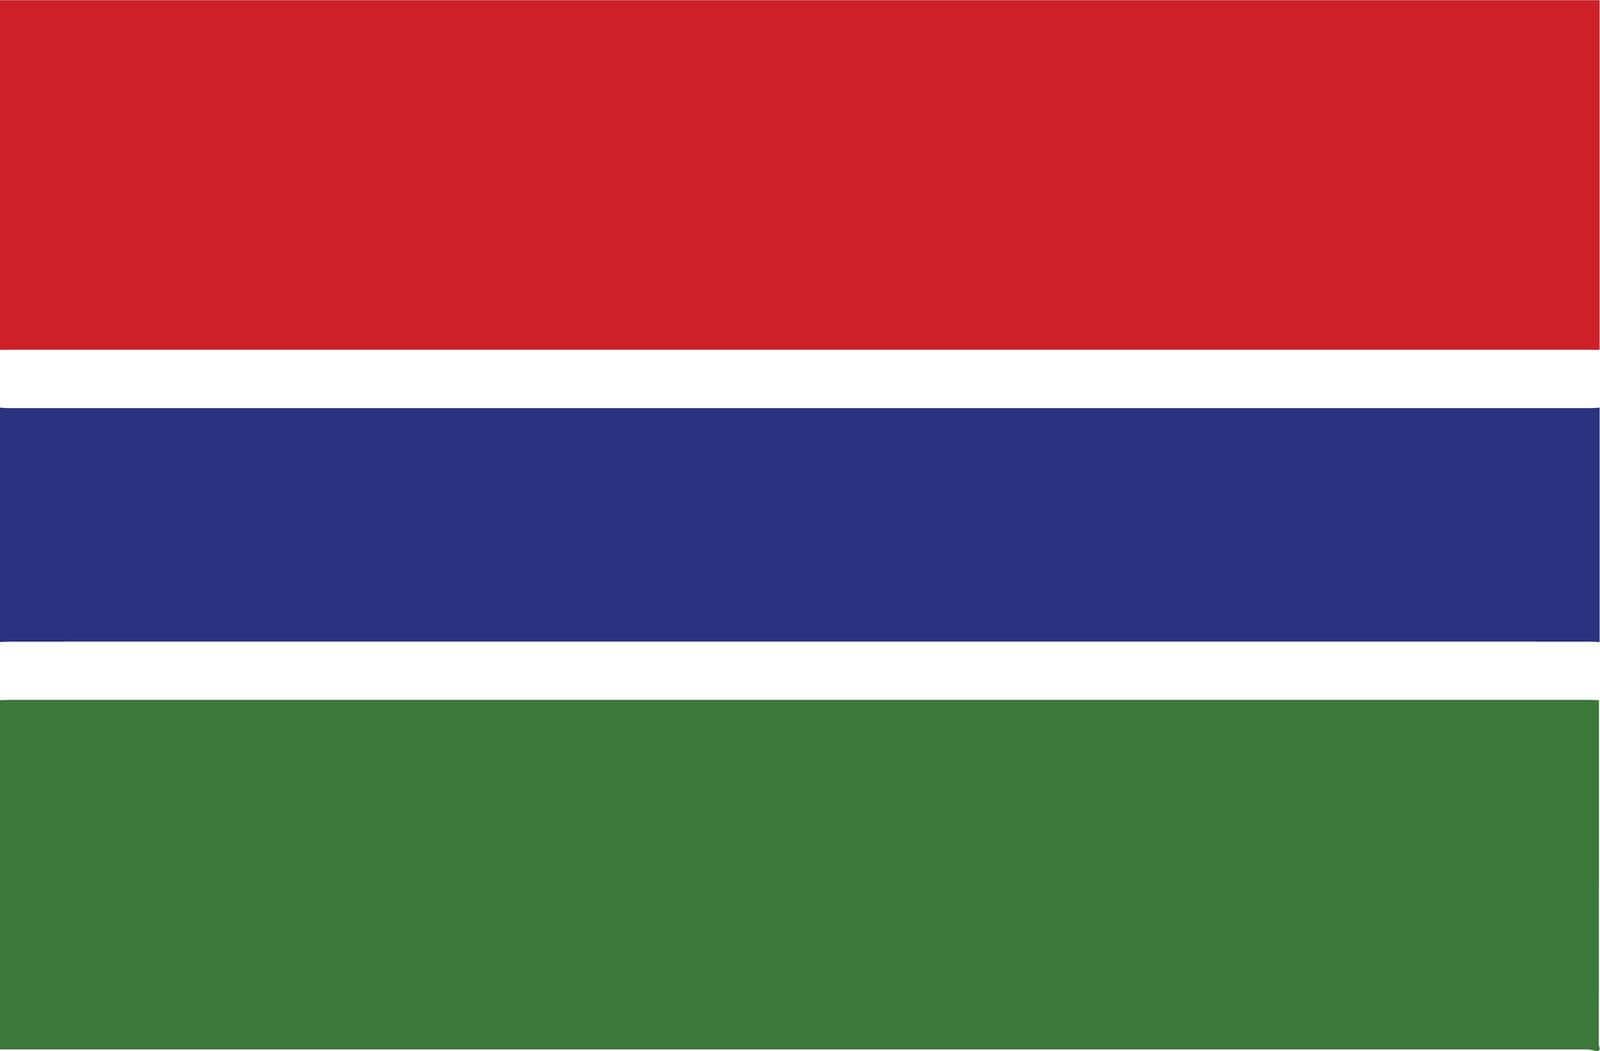 Gambia National Flag by Bigalbaloo